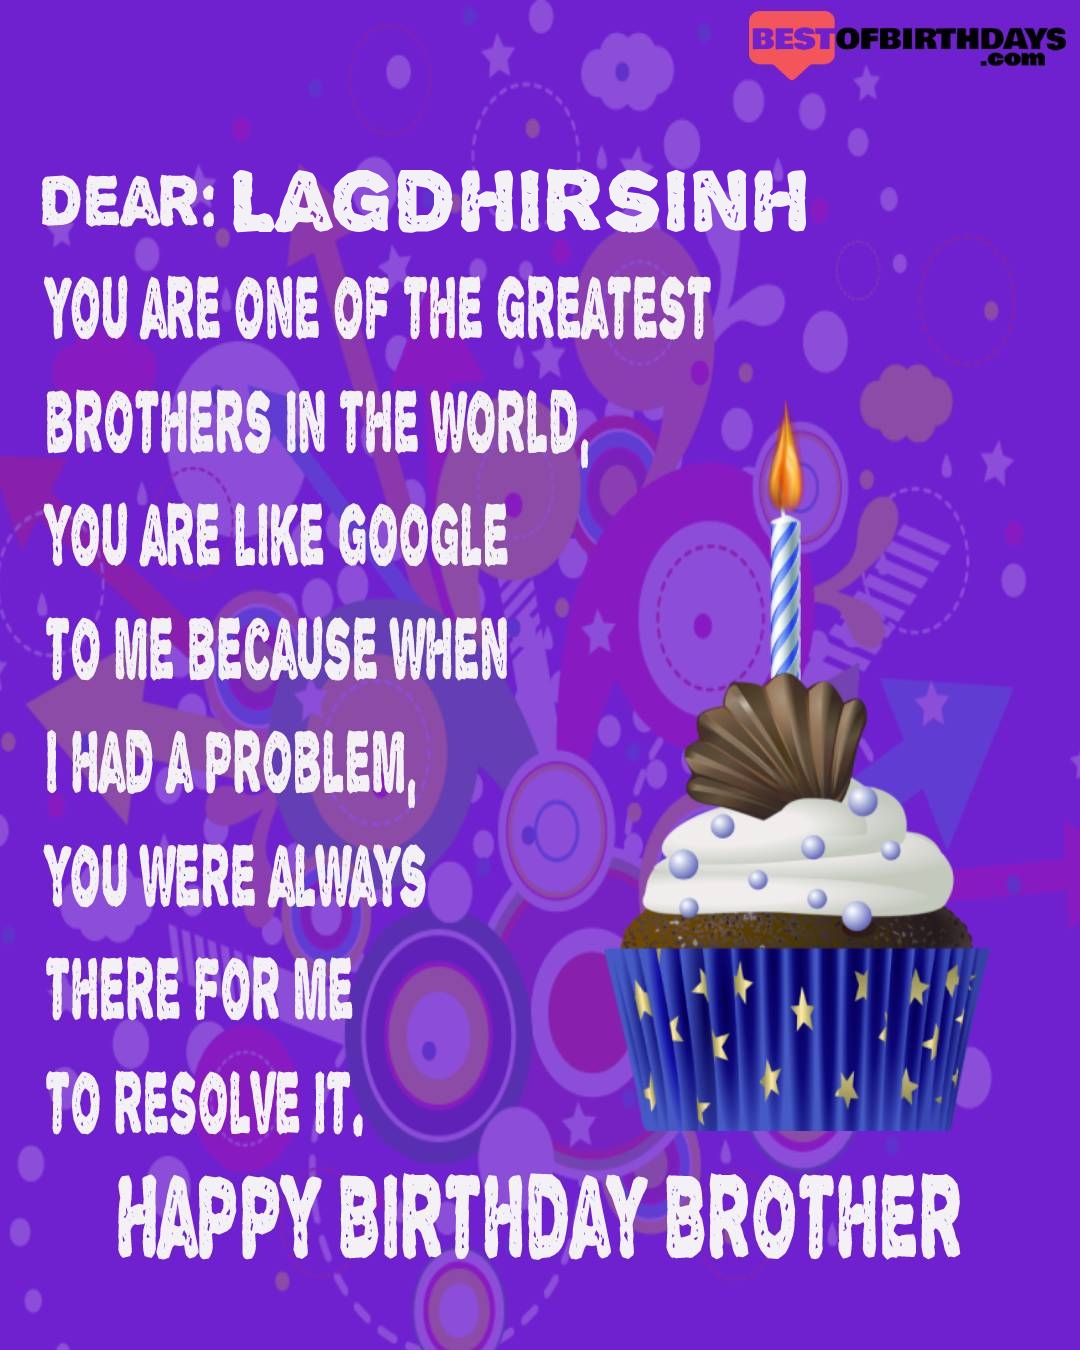 Happy birthday lagdhirsinh bhai brother bro